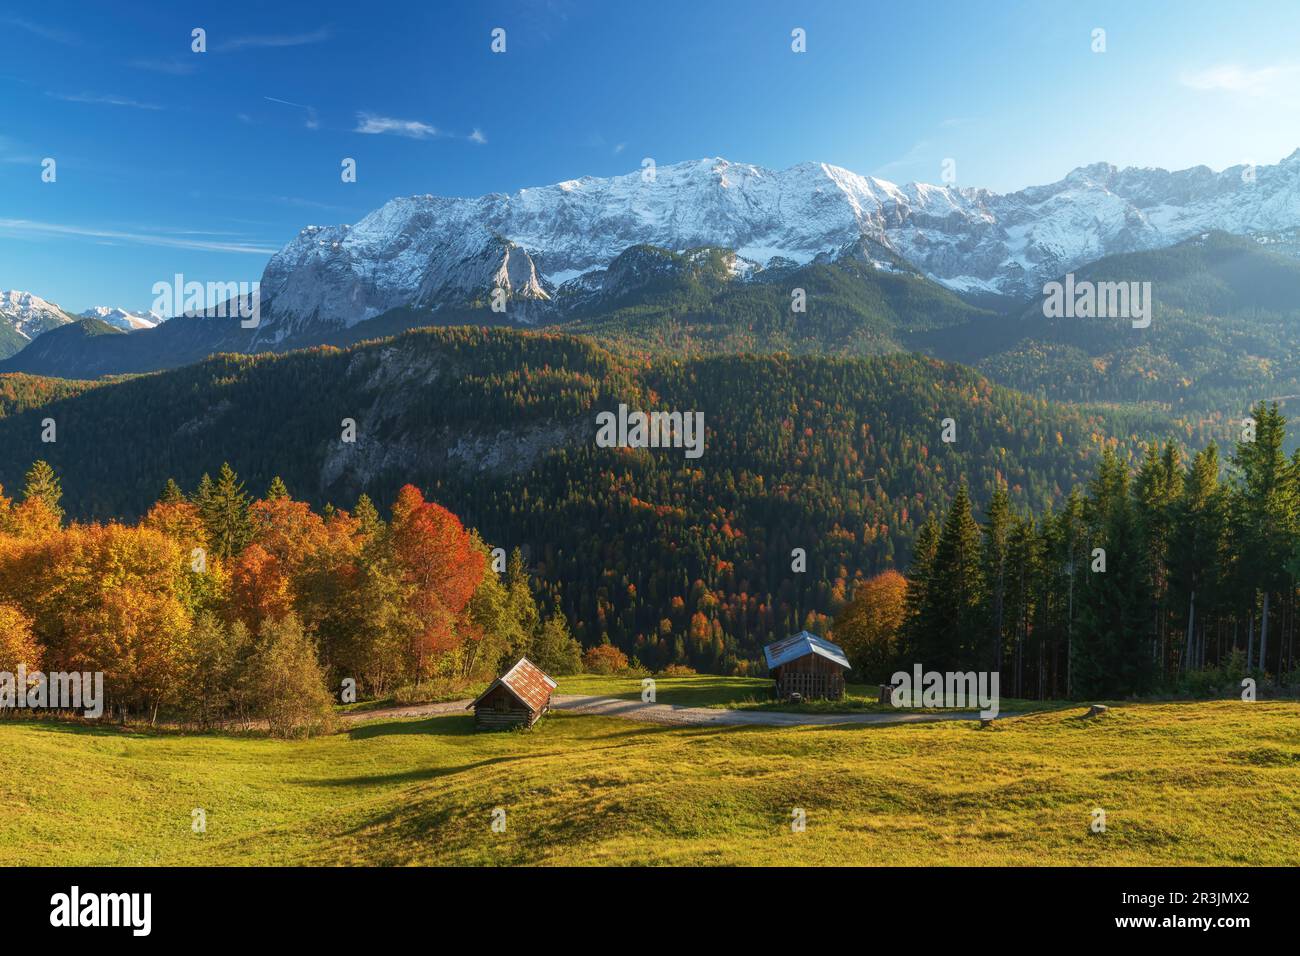 Fall colors and snow on the mountain peak near garmisch partenkirchen. Taken from Mountain Eckbauer. Stock Photo